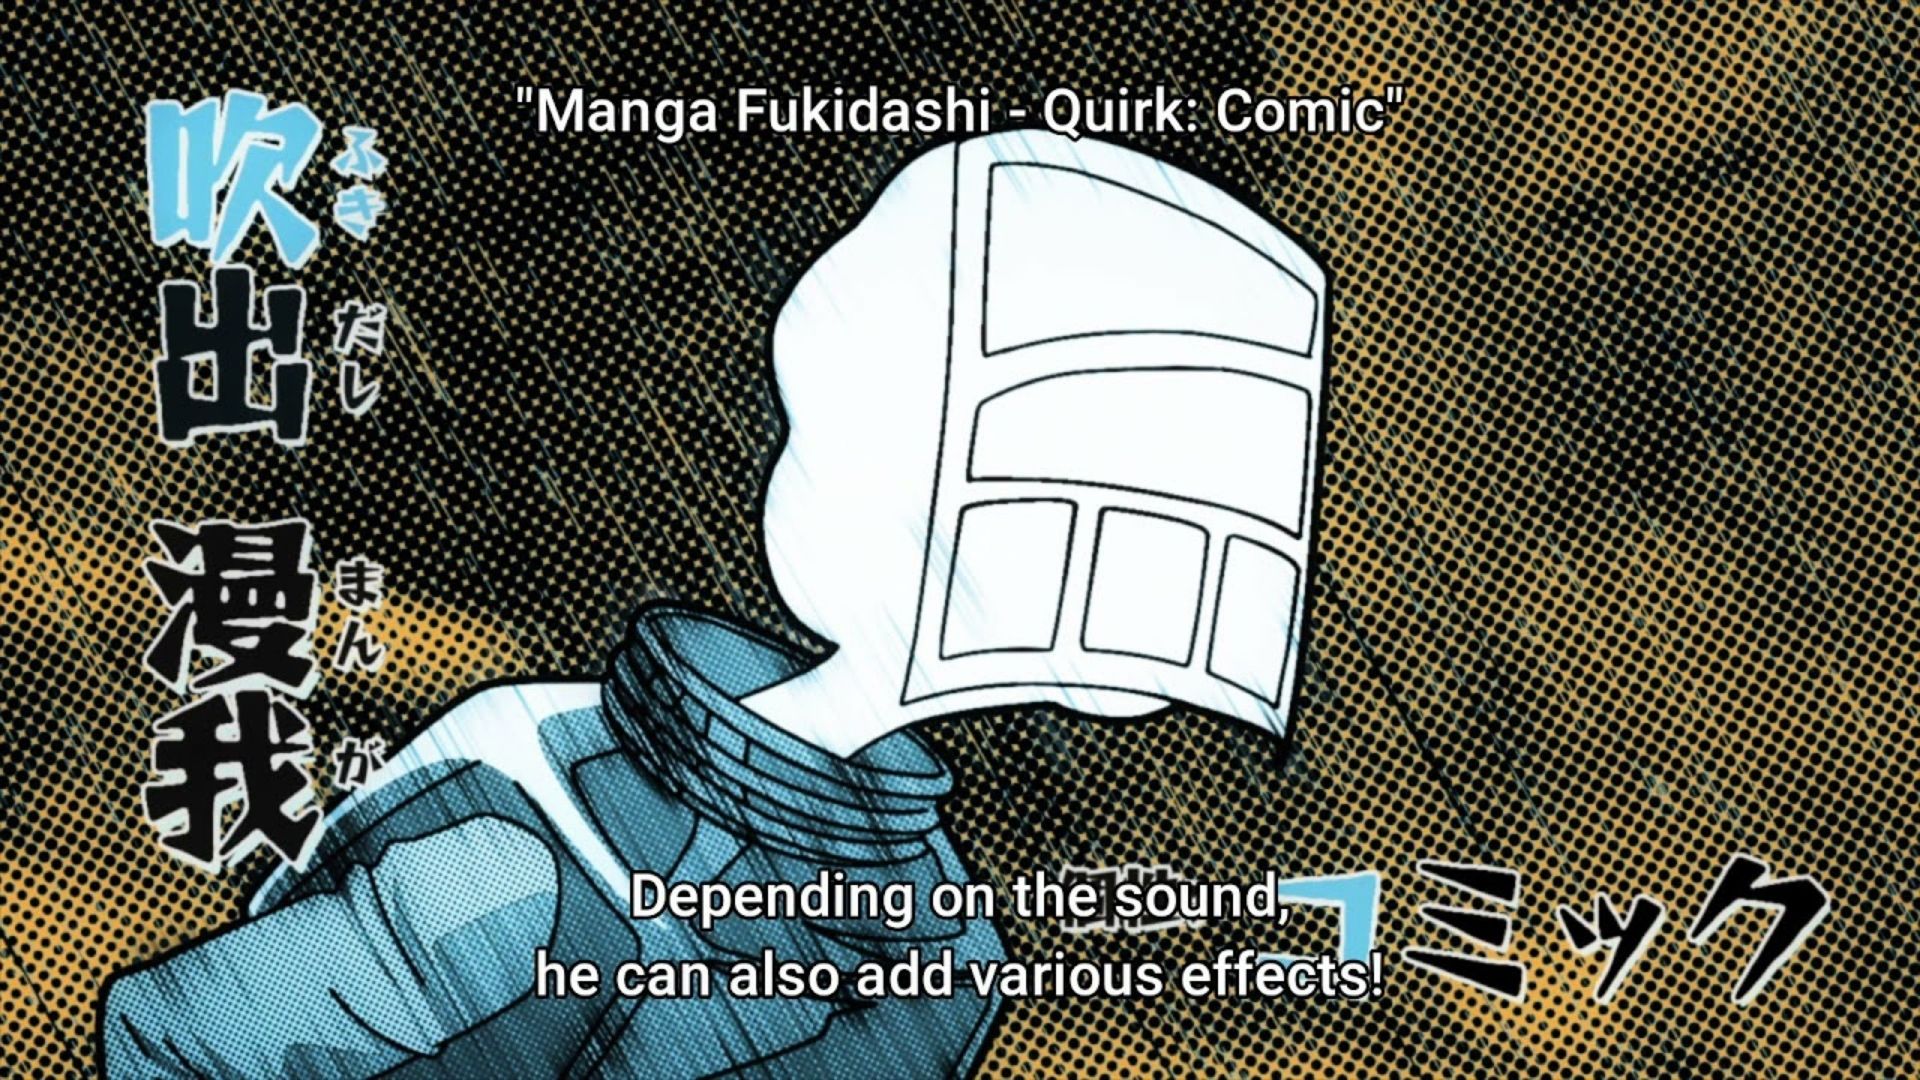 Fukidashi Manga (strangest quirks in my hero academia)